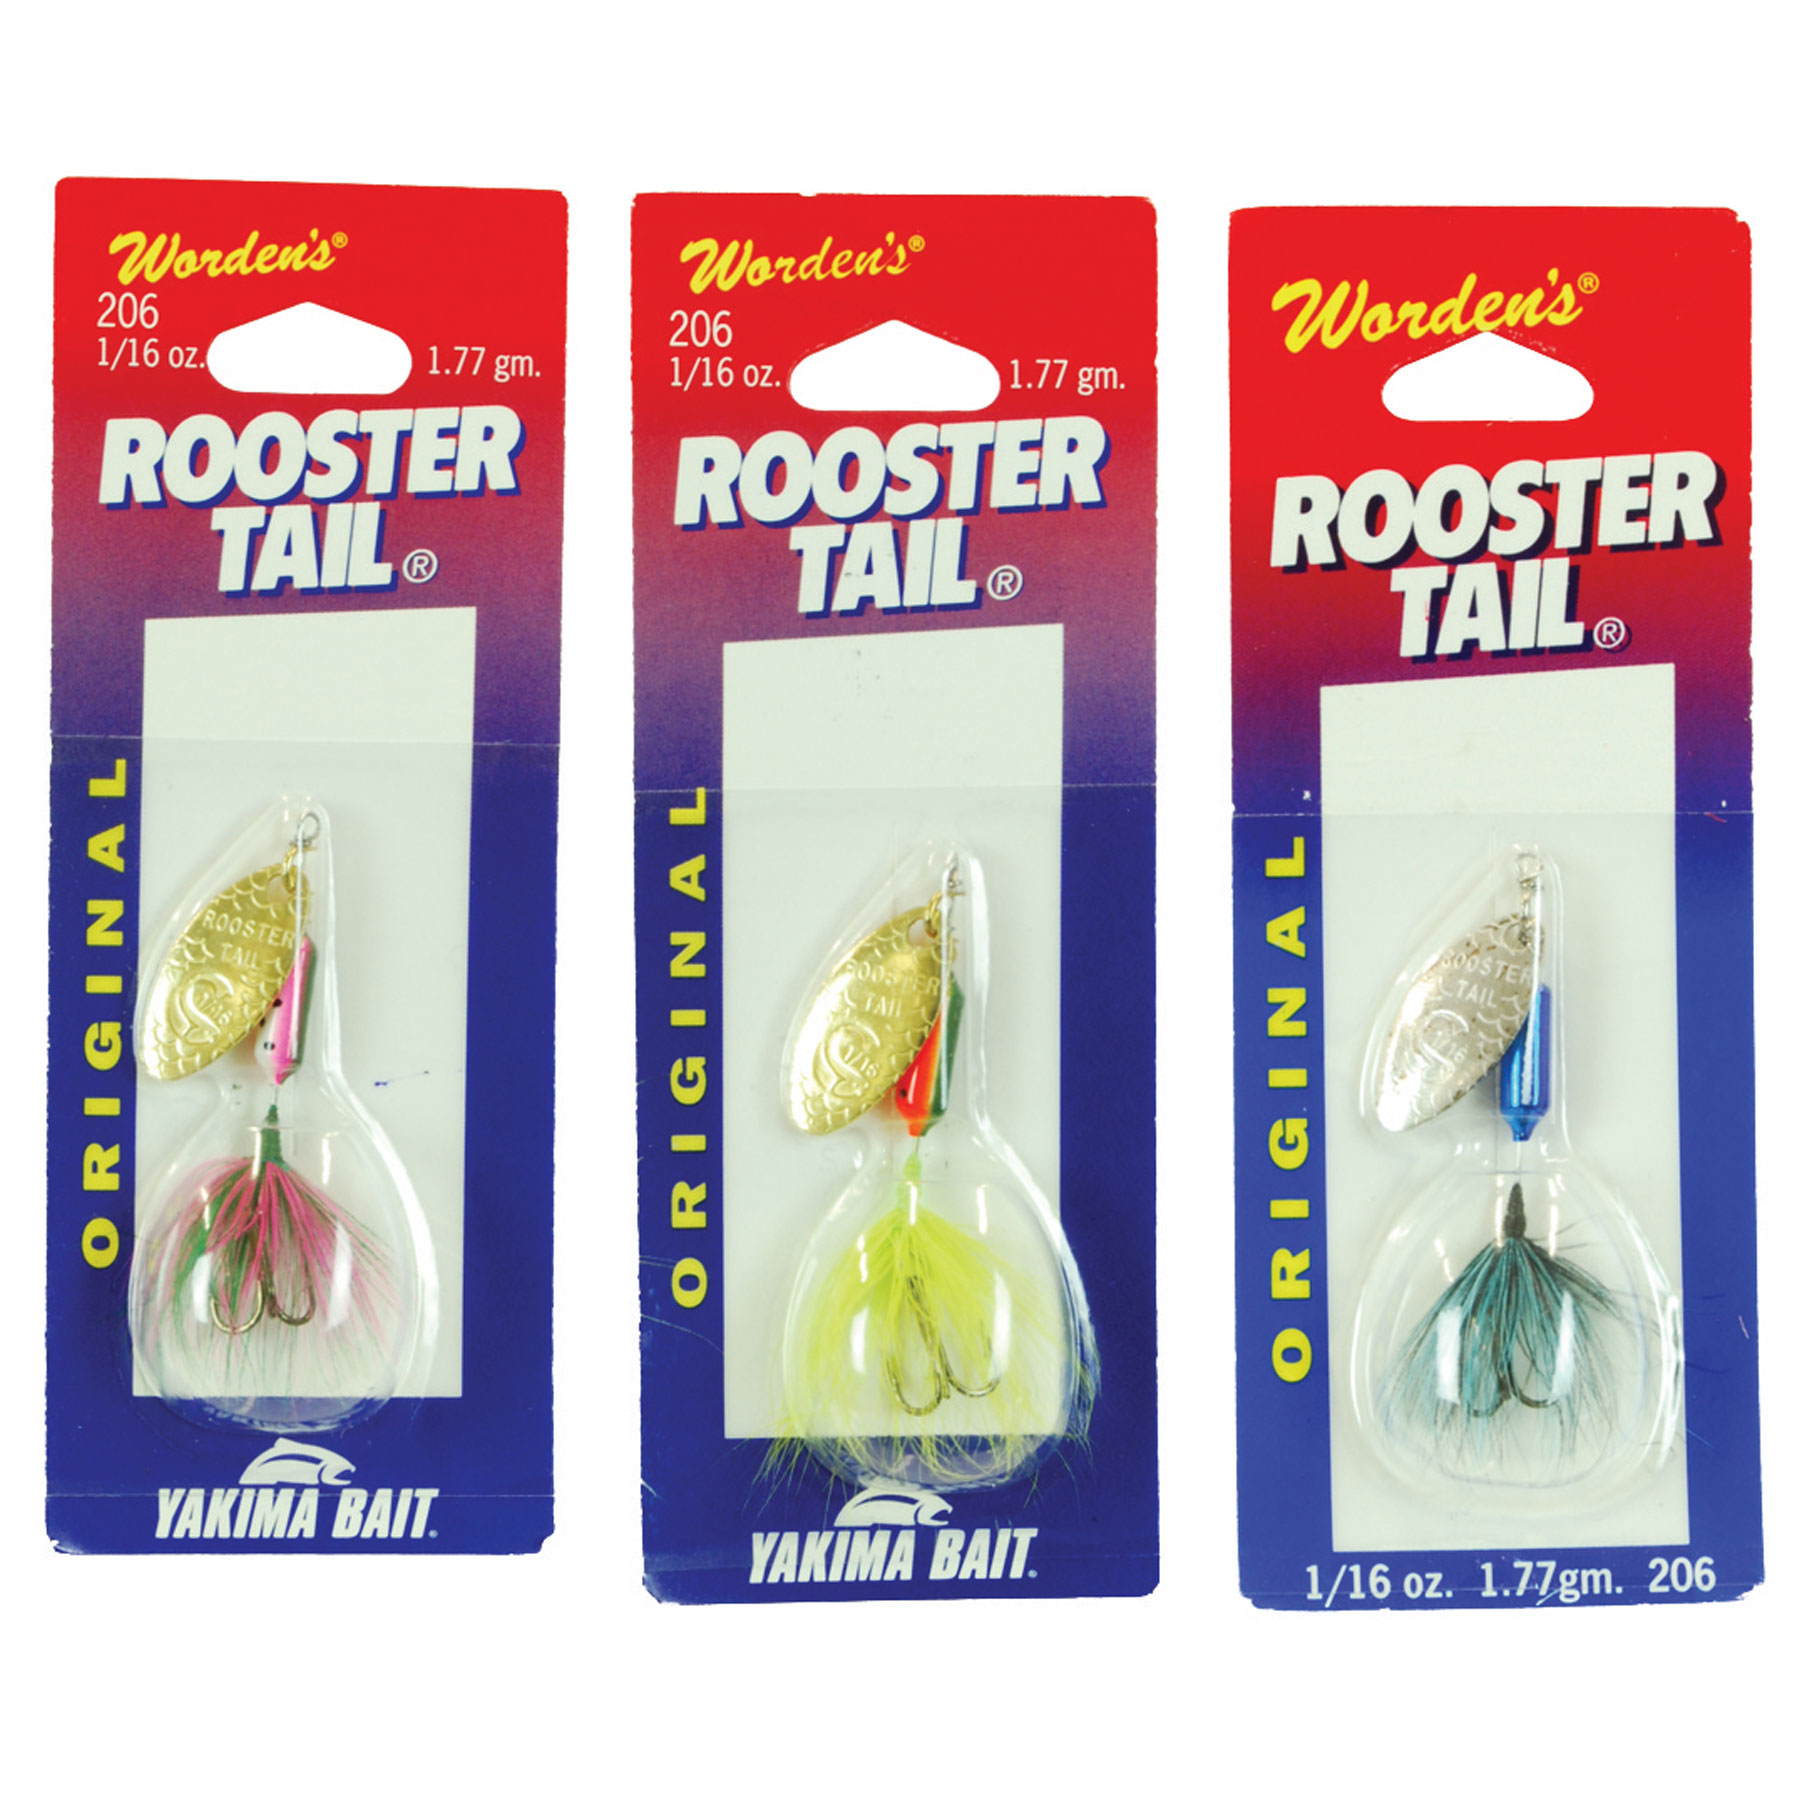 Worden's 1/16oz Original Rooster Tail